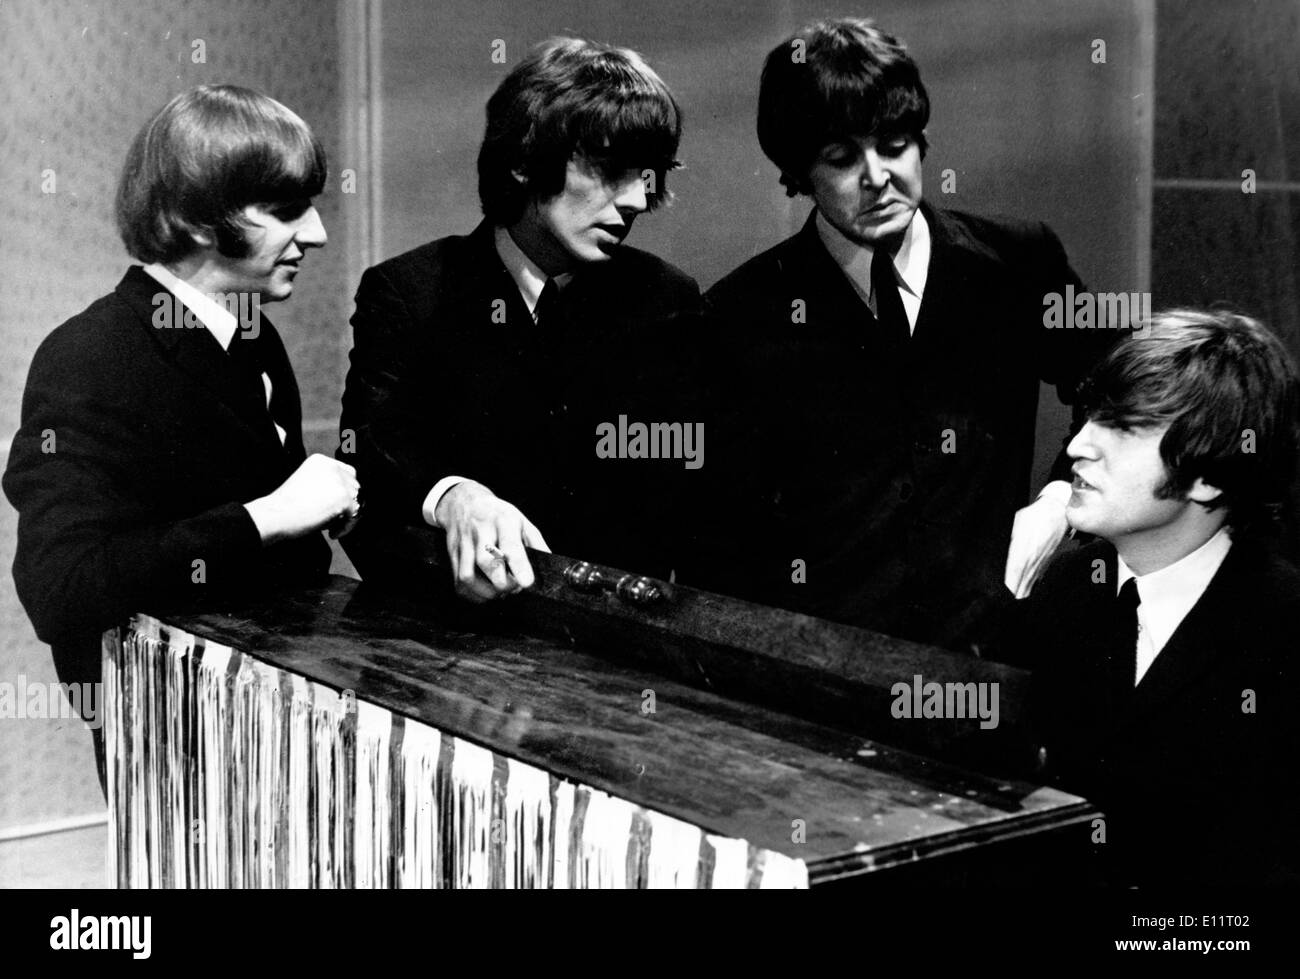 The Beatles RINGO STARR, GEORGE HARRISON, PAUL McCARTNEY, JOHN LENNON during recording session Stock Photo